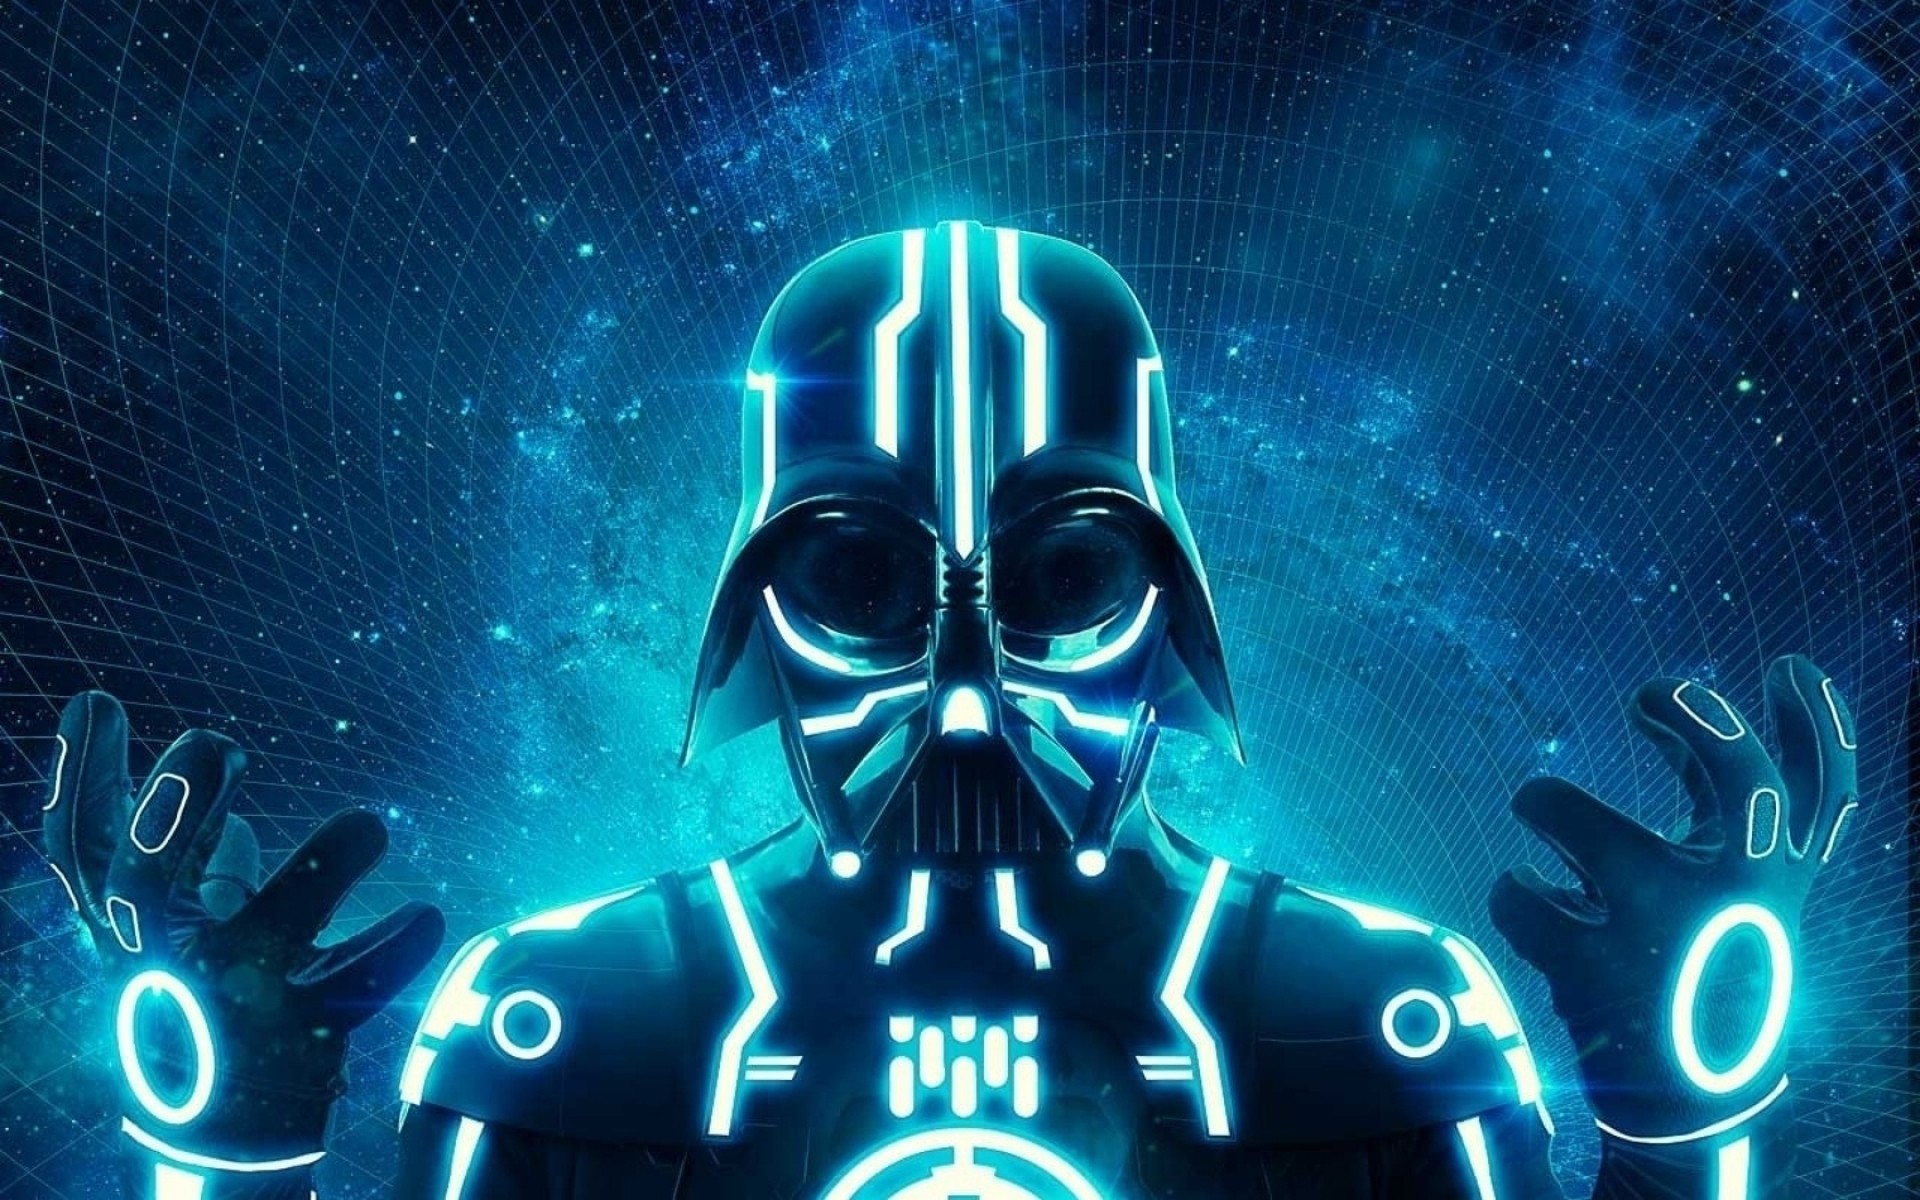 Star Wars Darth Vader Fan Art Tron Mix Up Crossover Cyan Blue Grid 1920x1200